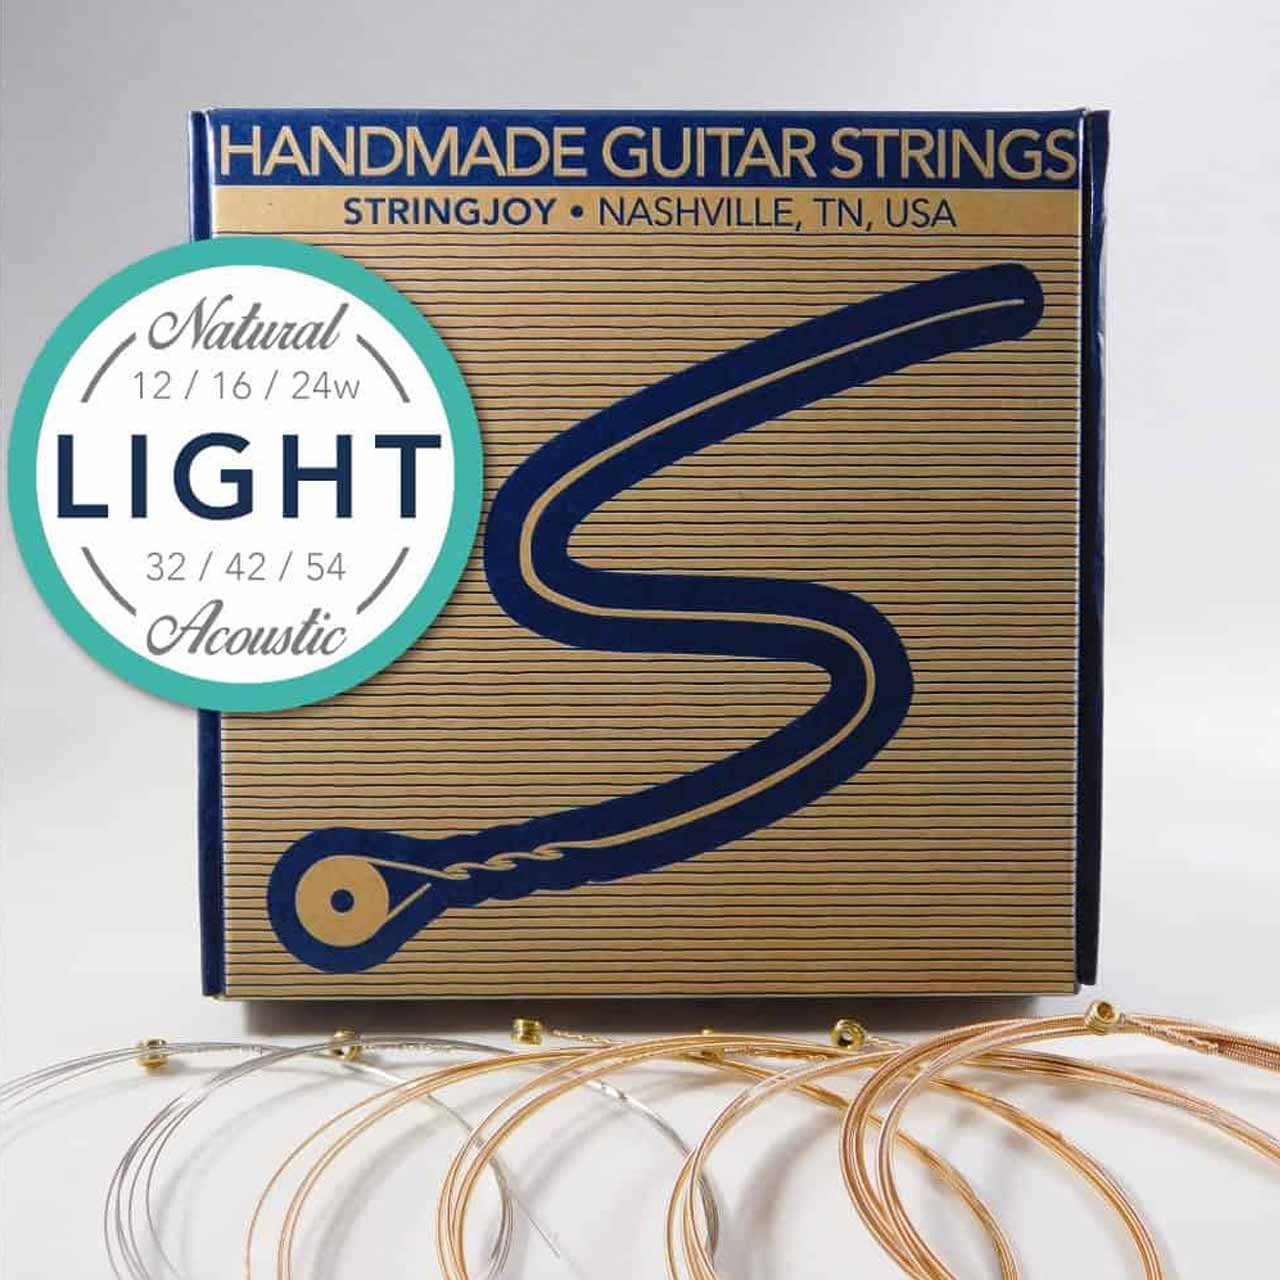 Fingerease Guitar String Lubricant